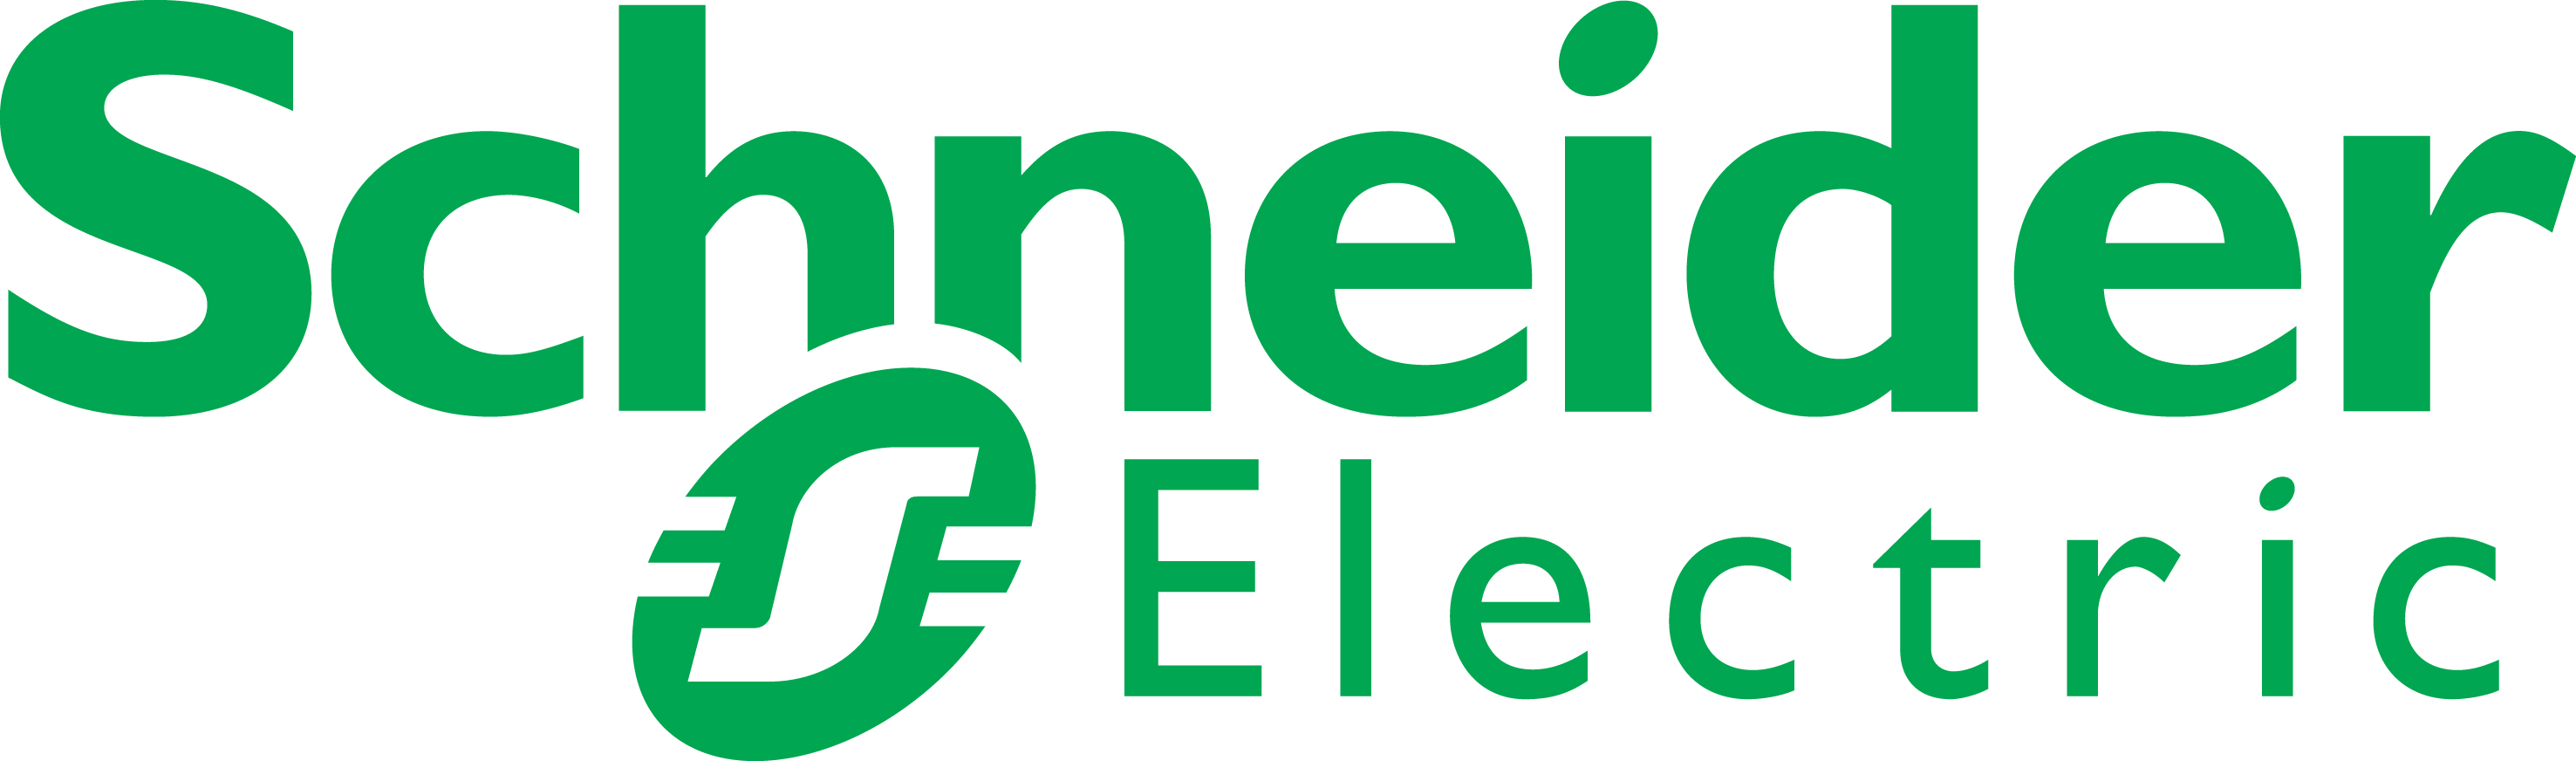 File:Schneider-Electric-Logo.jpg - Wikipedia